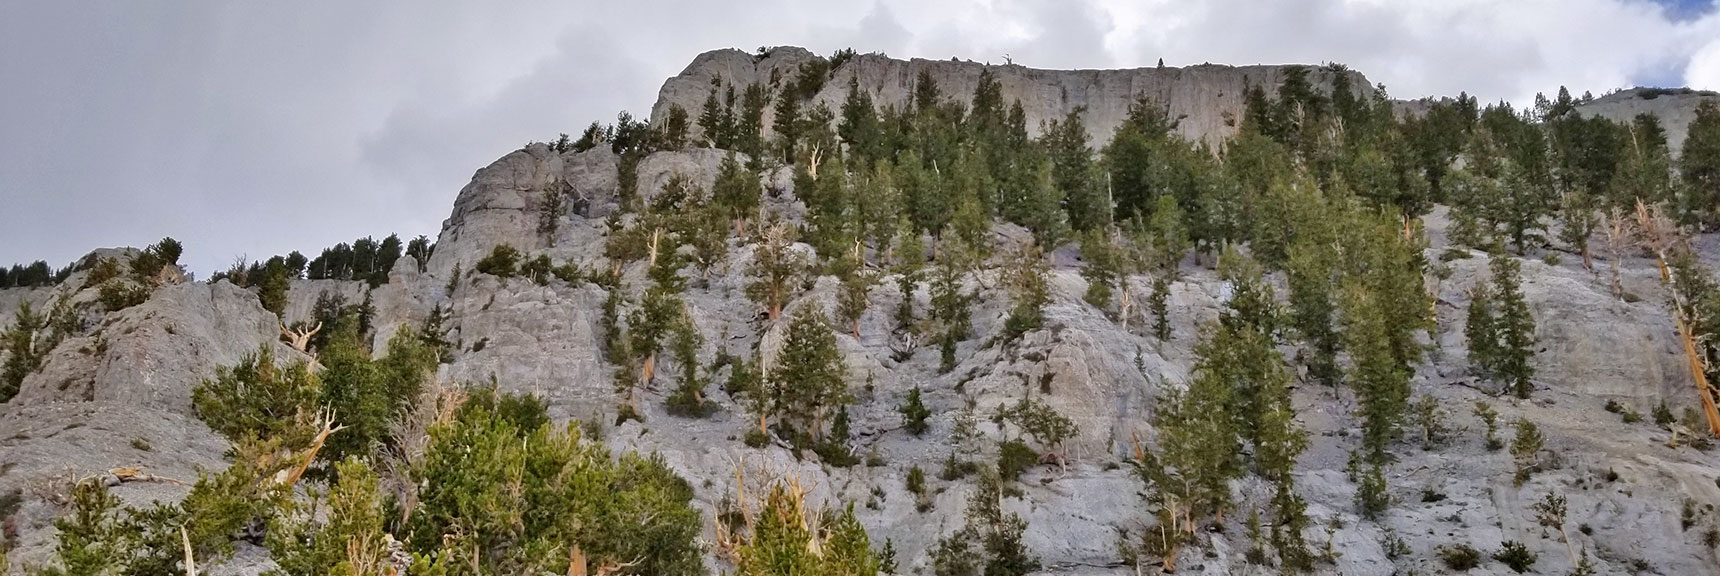 Mummy Mountain Eastern Cliff and Ridge | Mummy Mountain NNE, Mt. Charleston Wilderness, Nevada, Slide 024